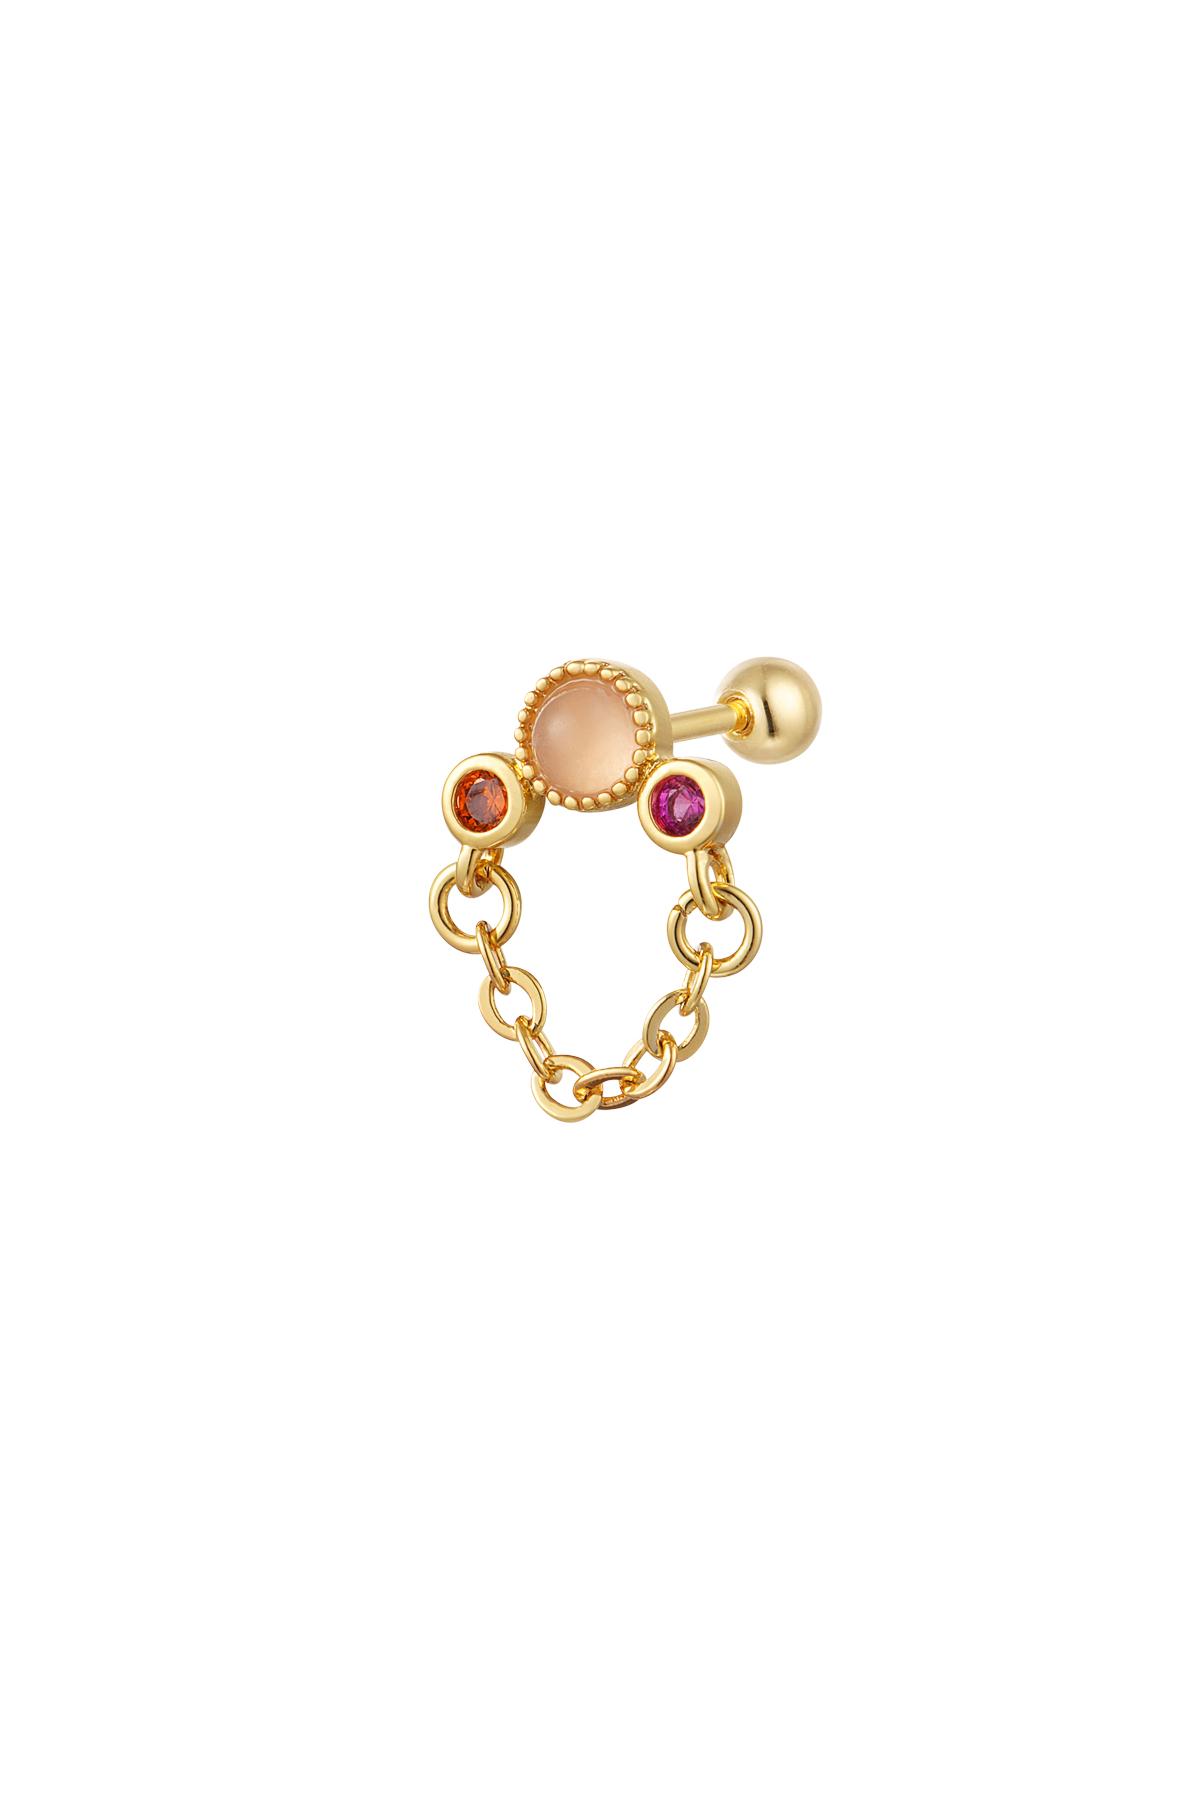 Piercing con cadena - Colección Sparkle Naranja & Oro Cobre 